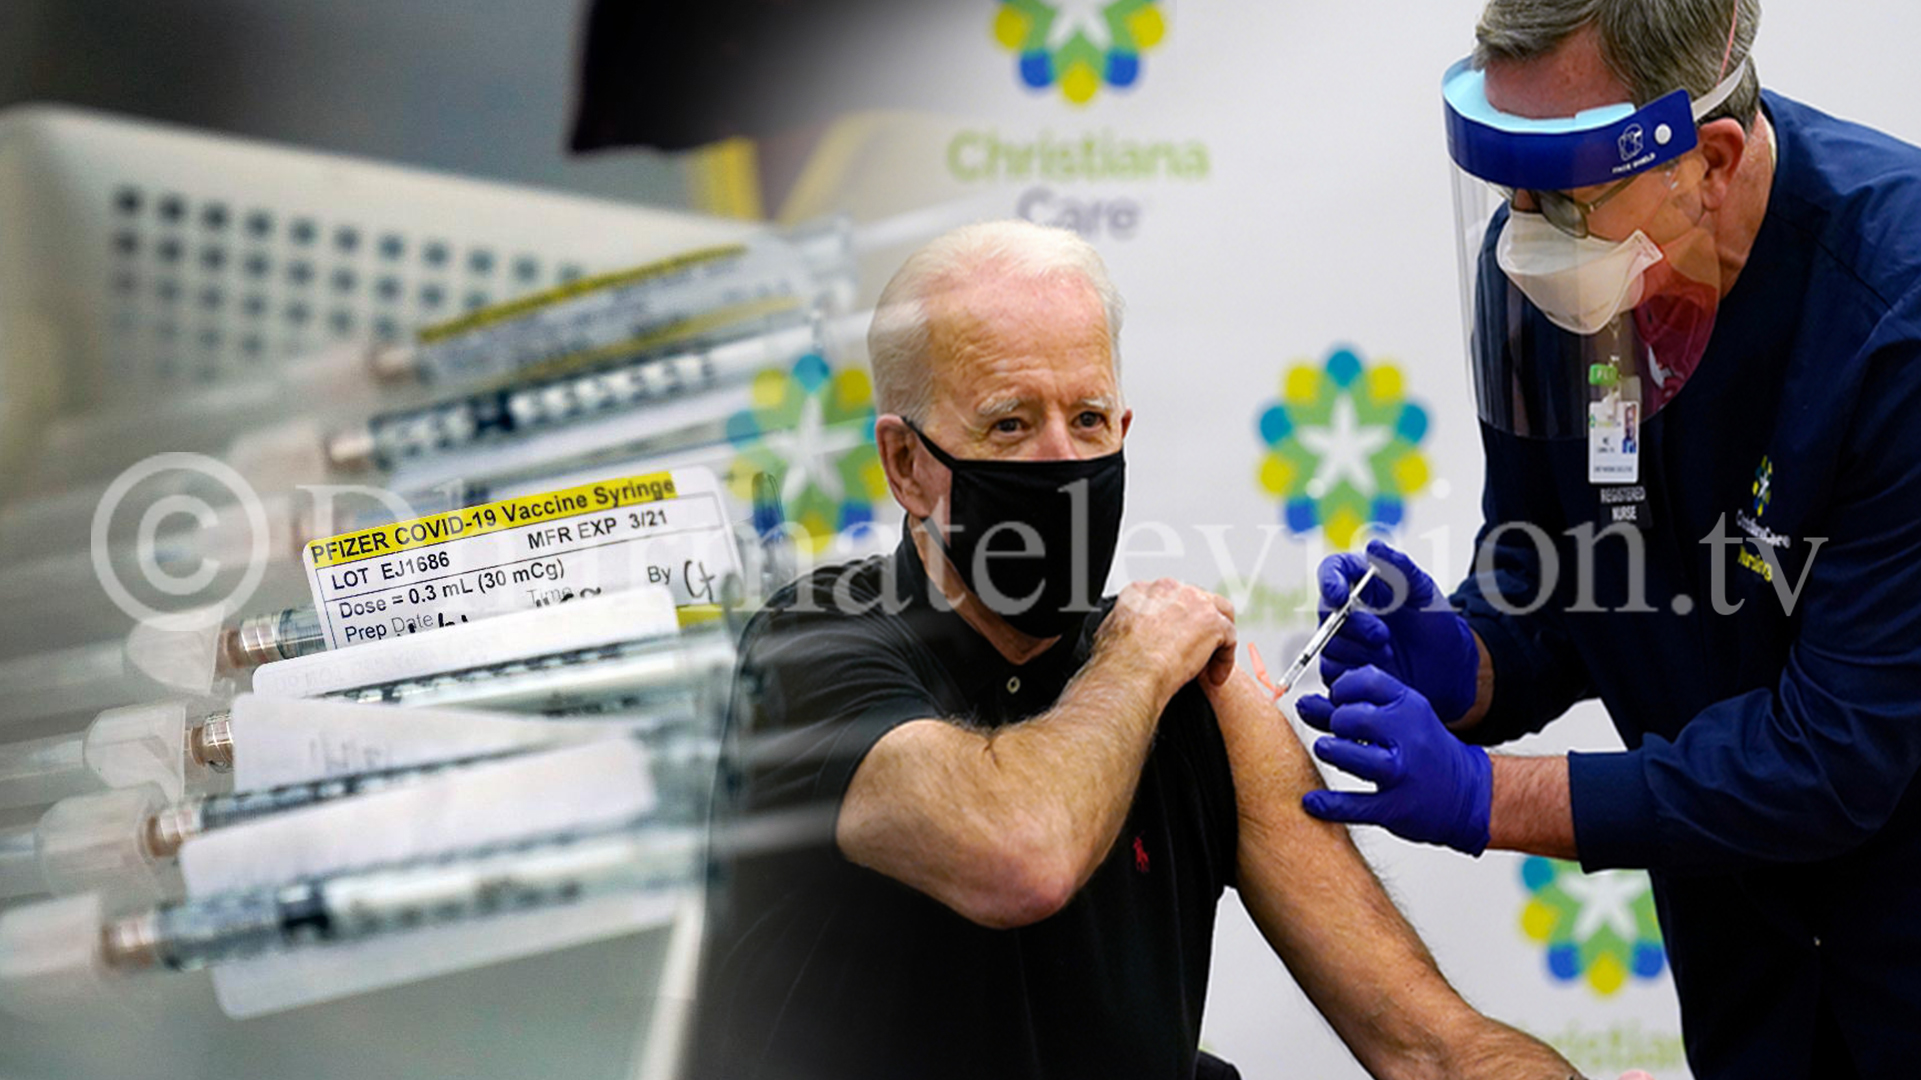 Biden administered a second dose of coronavirus vaccine